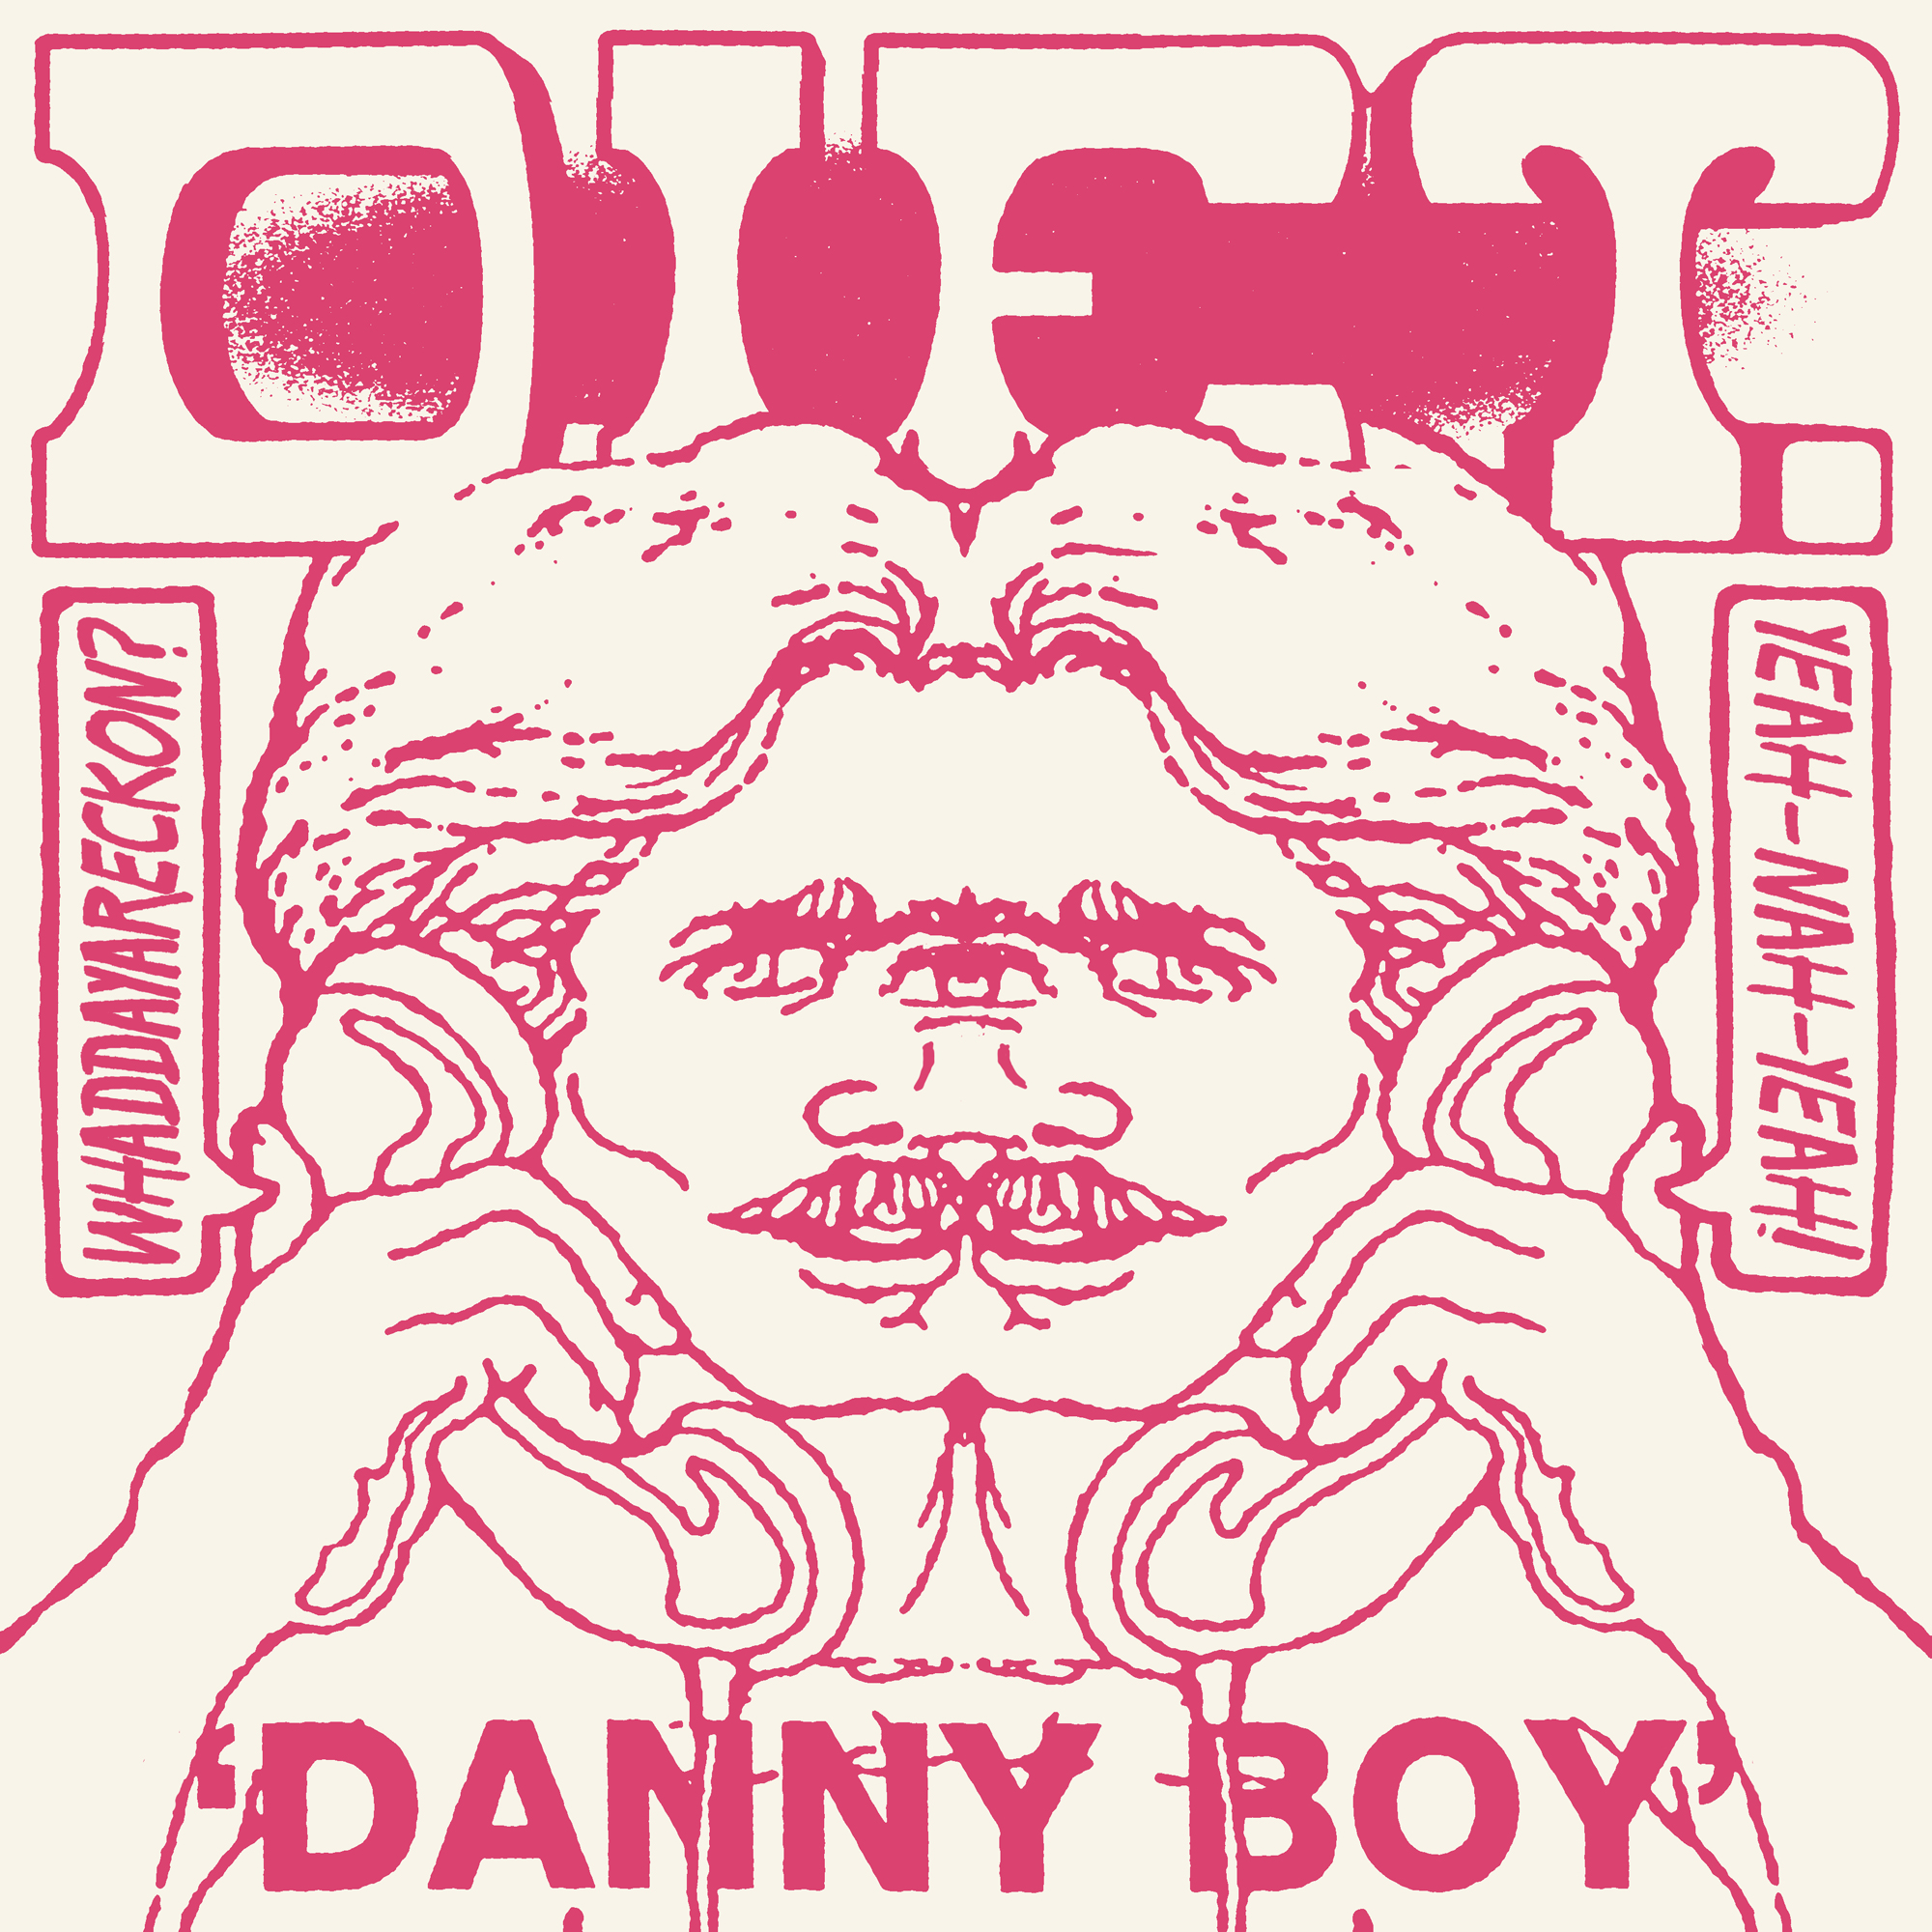 DIET-Danny-Boy-Single-Artwork-Web.jpg